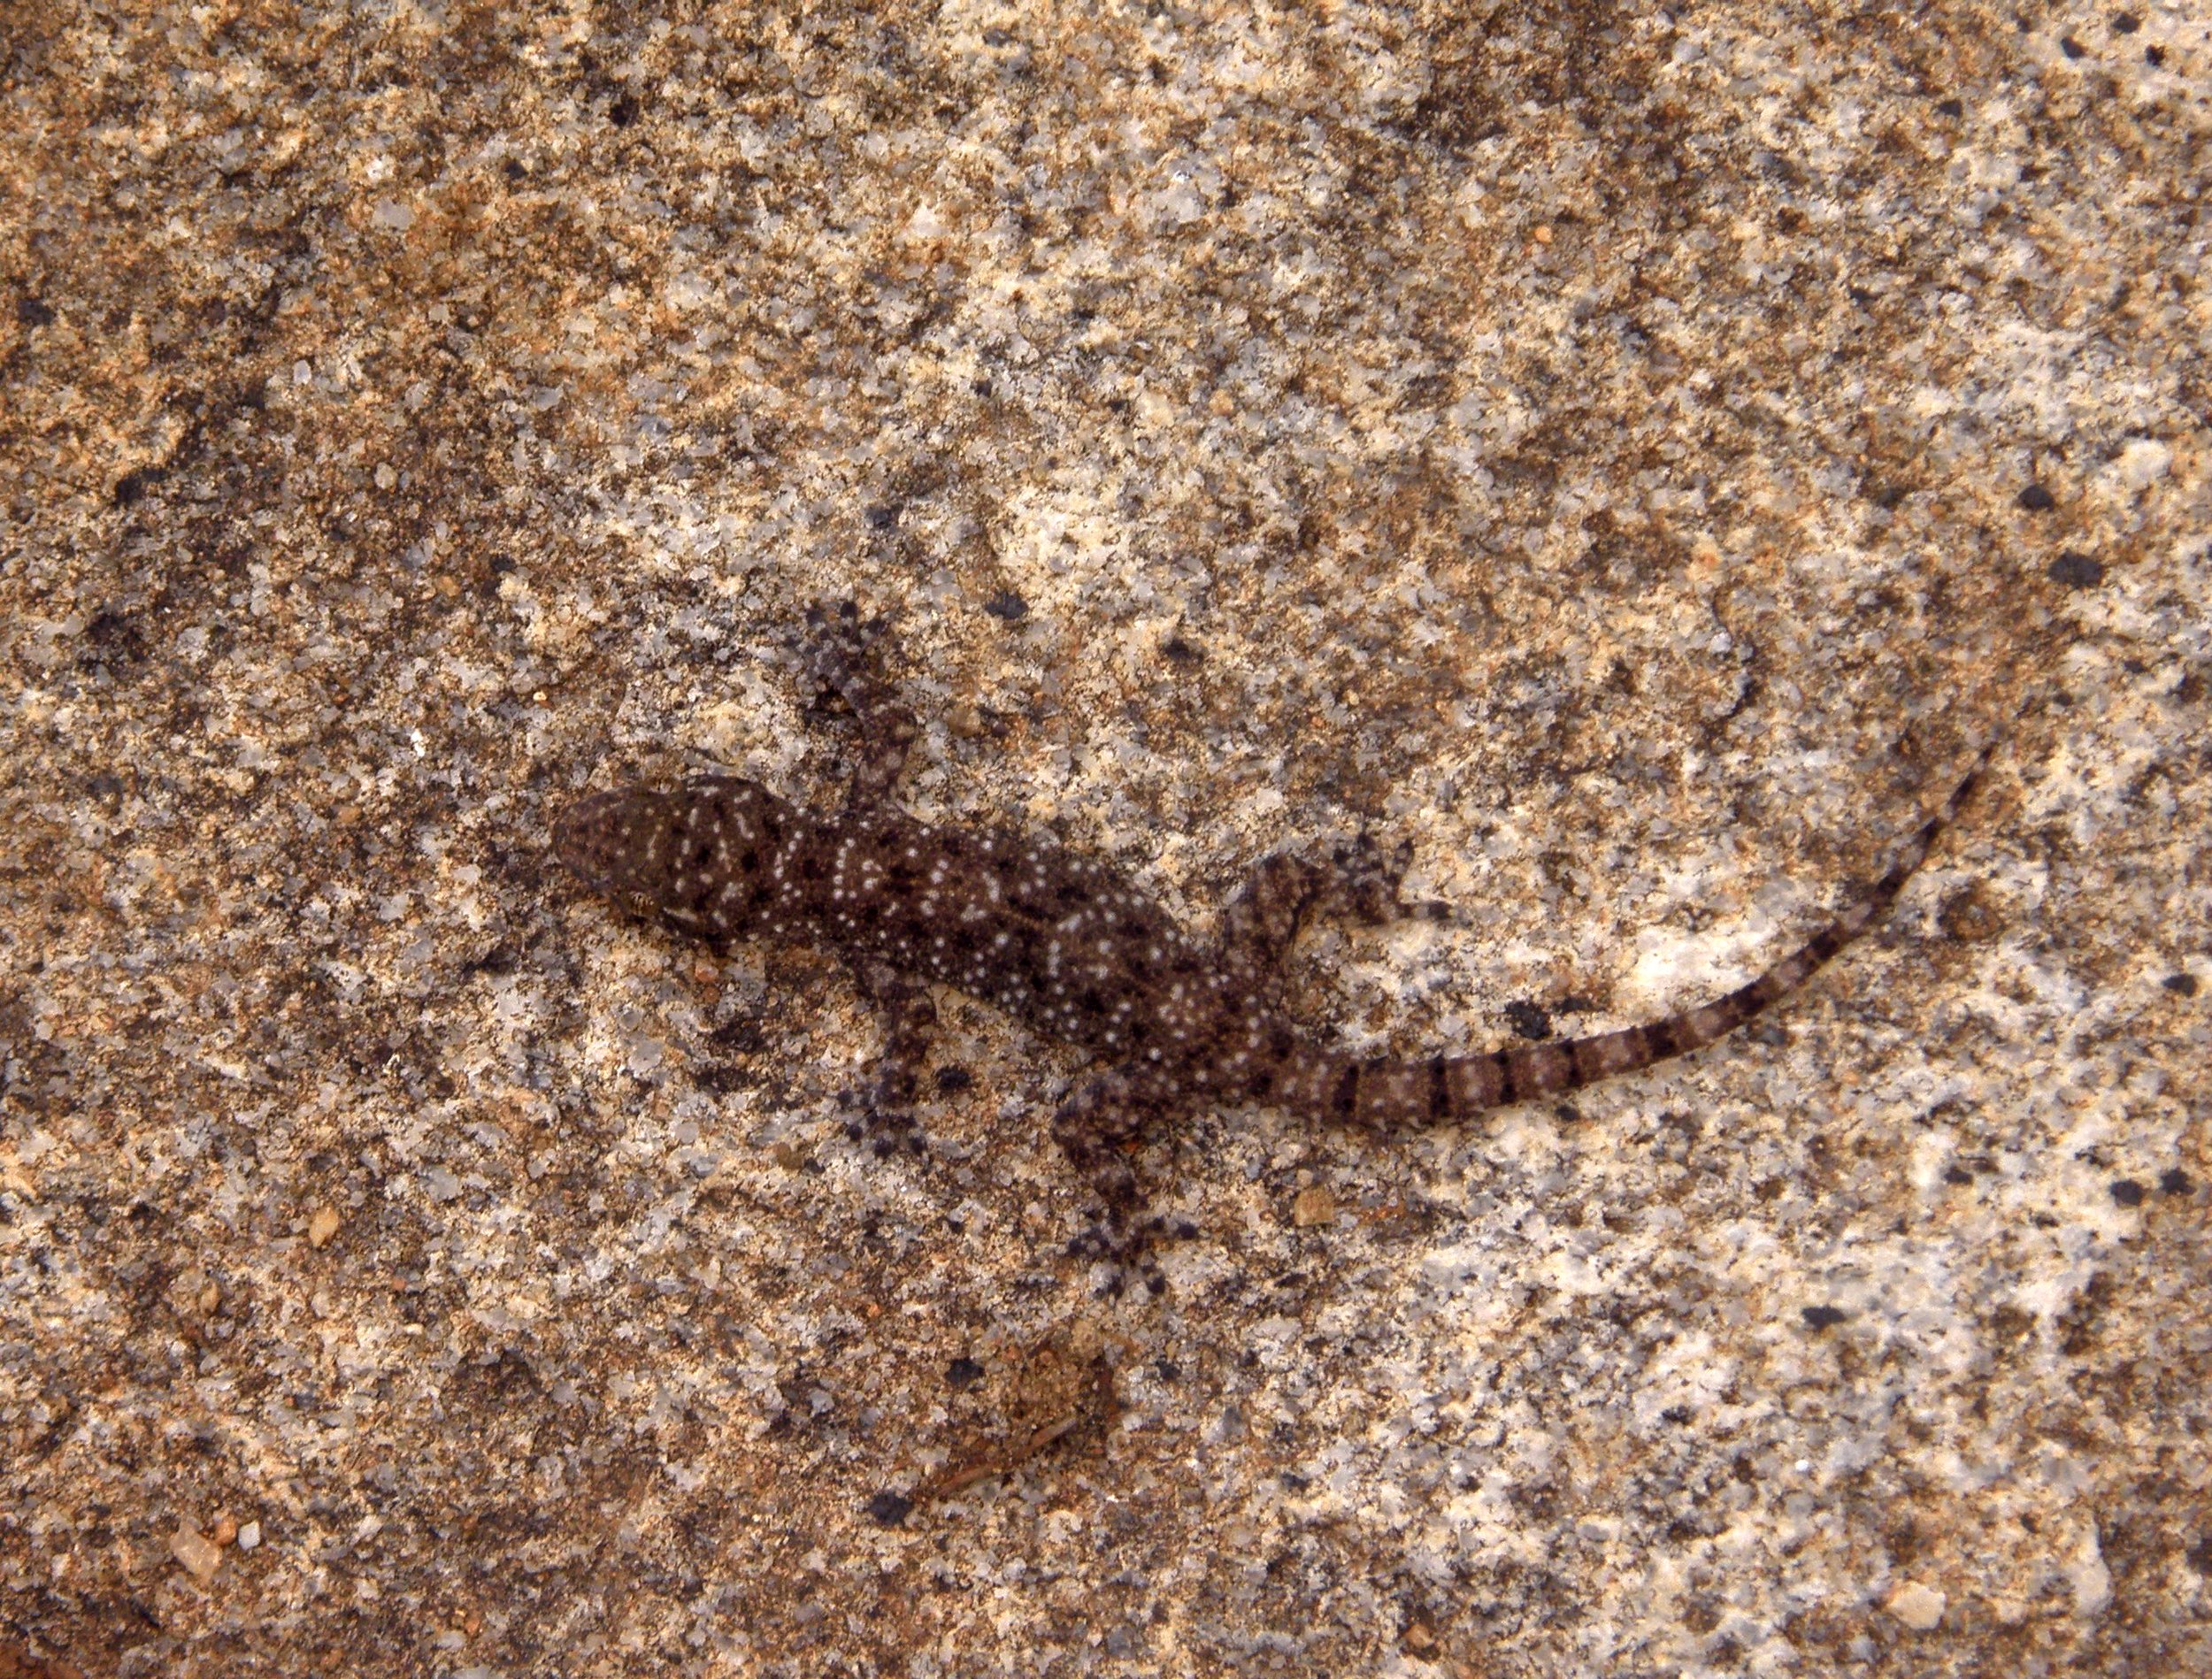  Rishi Valley Rock Gecko